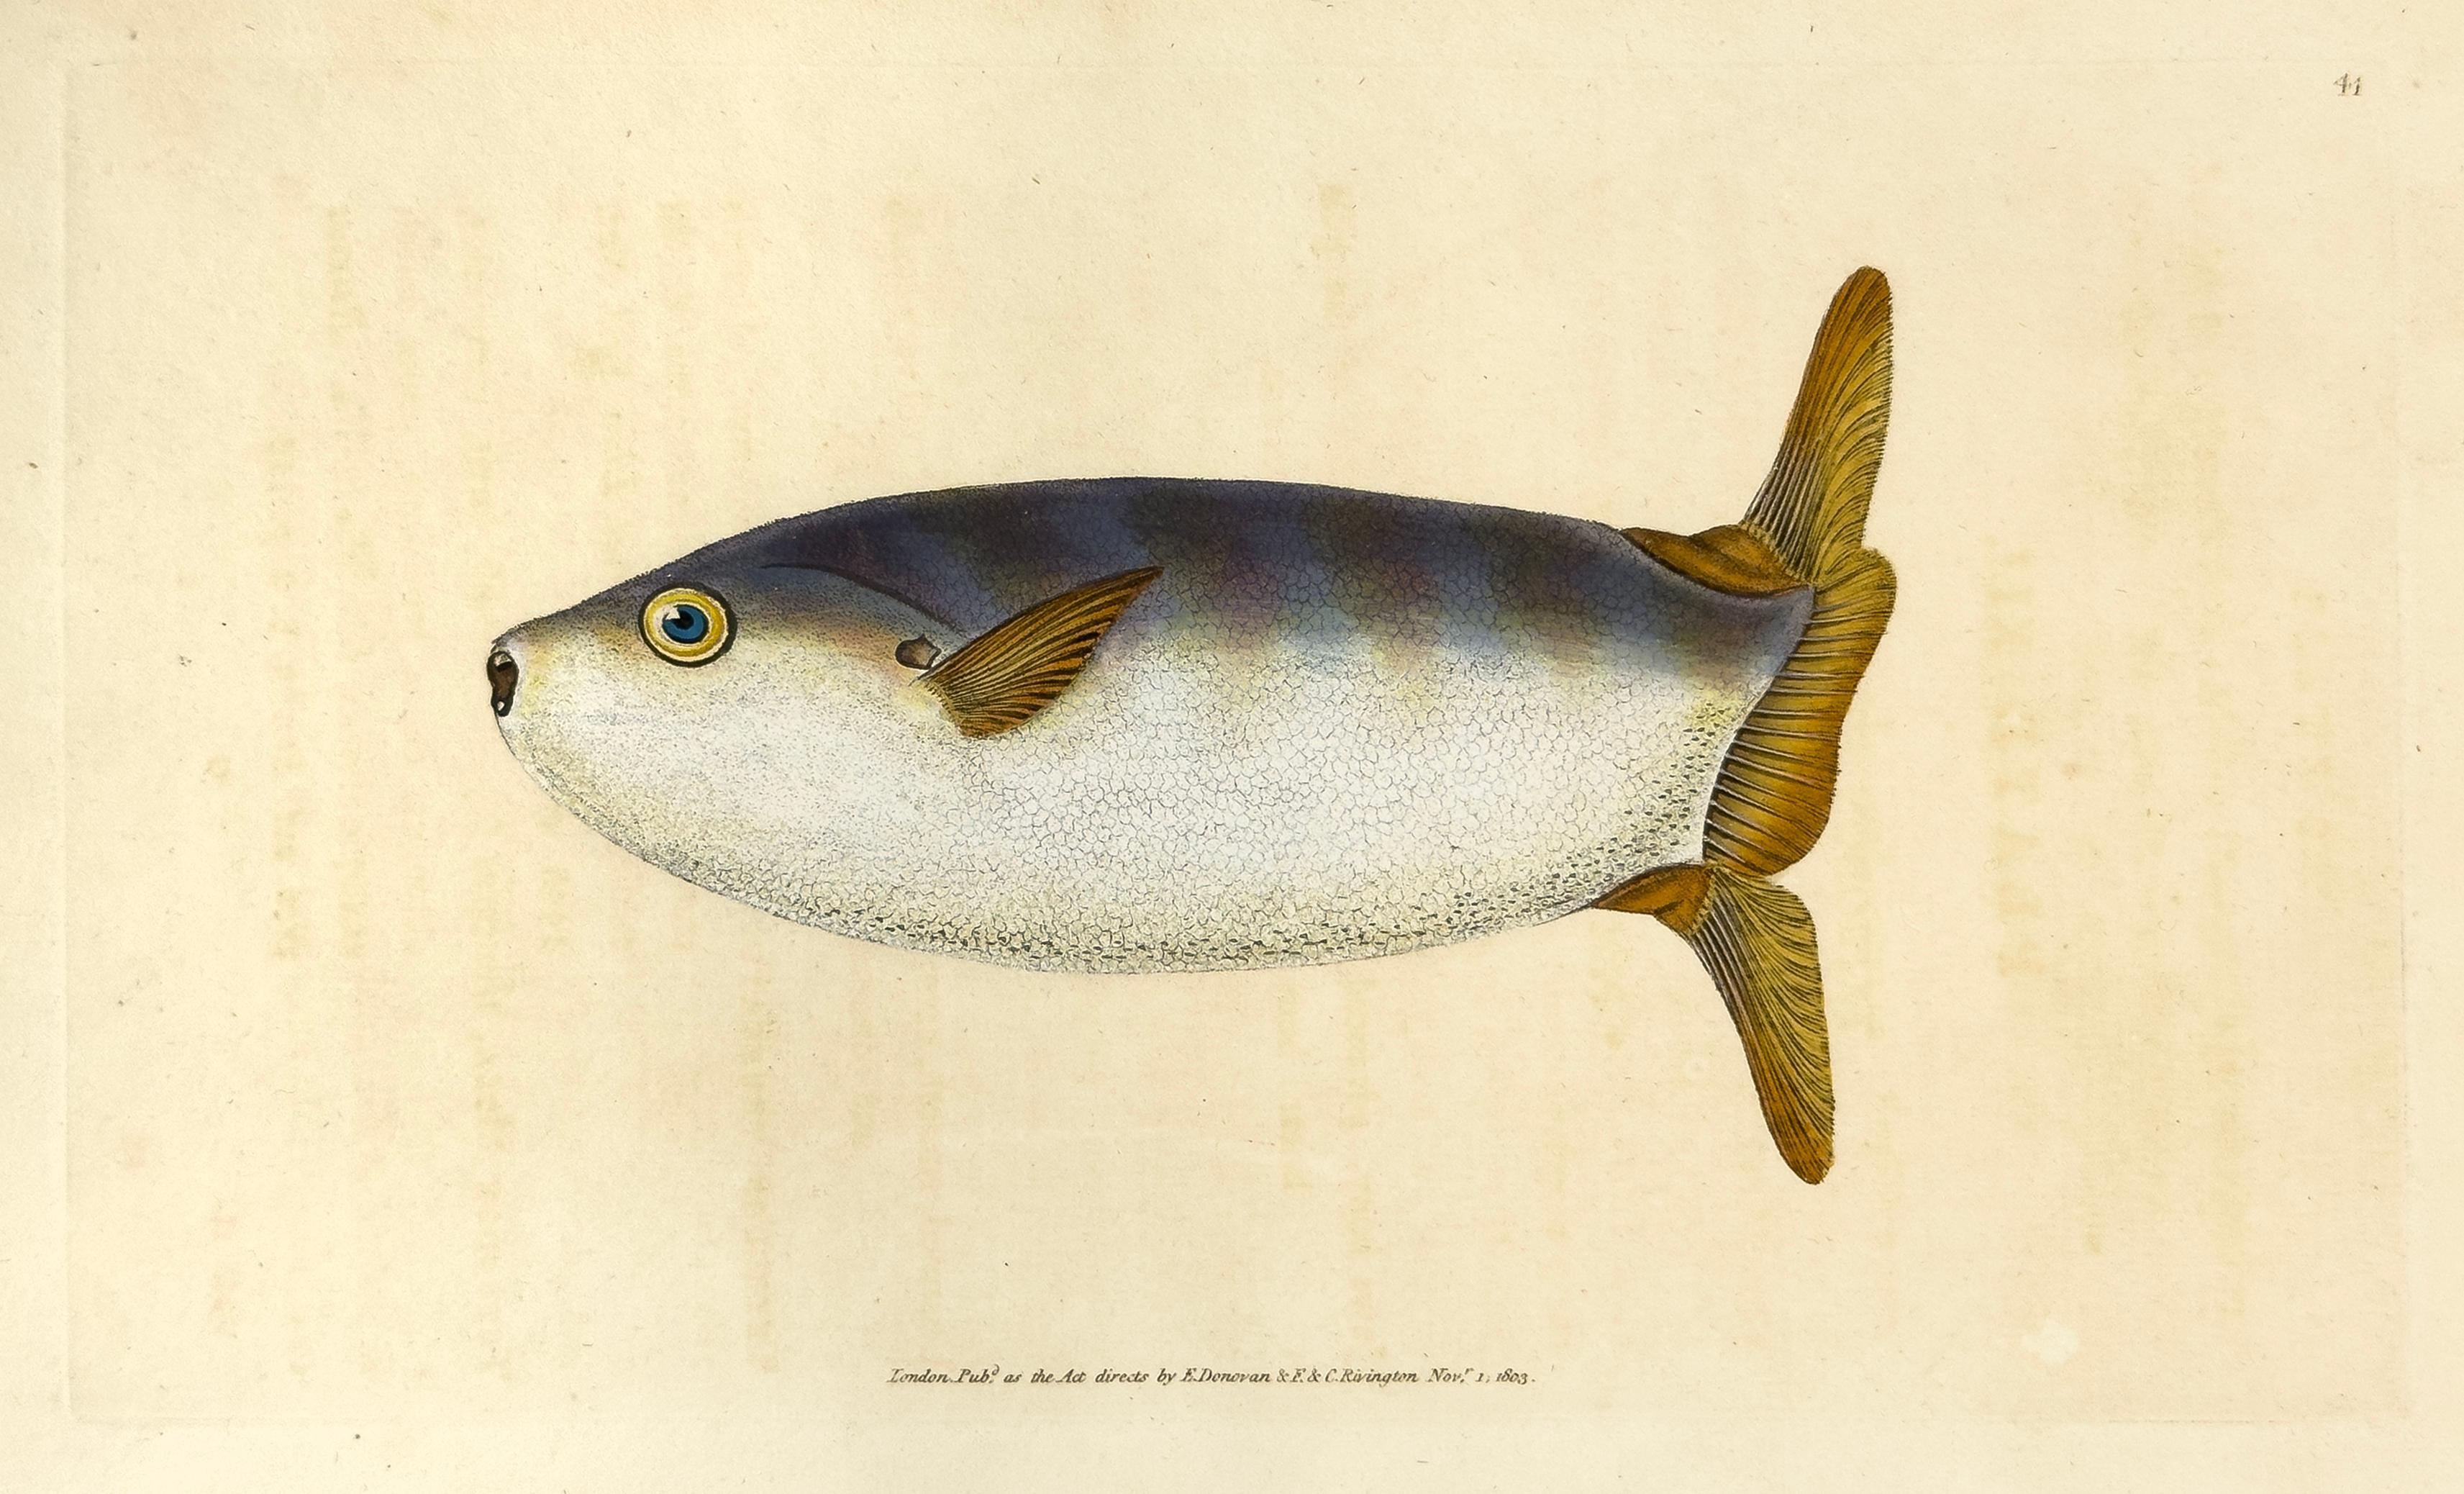 Edward Donovan Animal Print - 41: Tetrodon truncatus, Truncated Sun-Fish